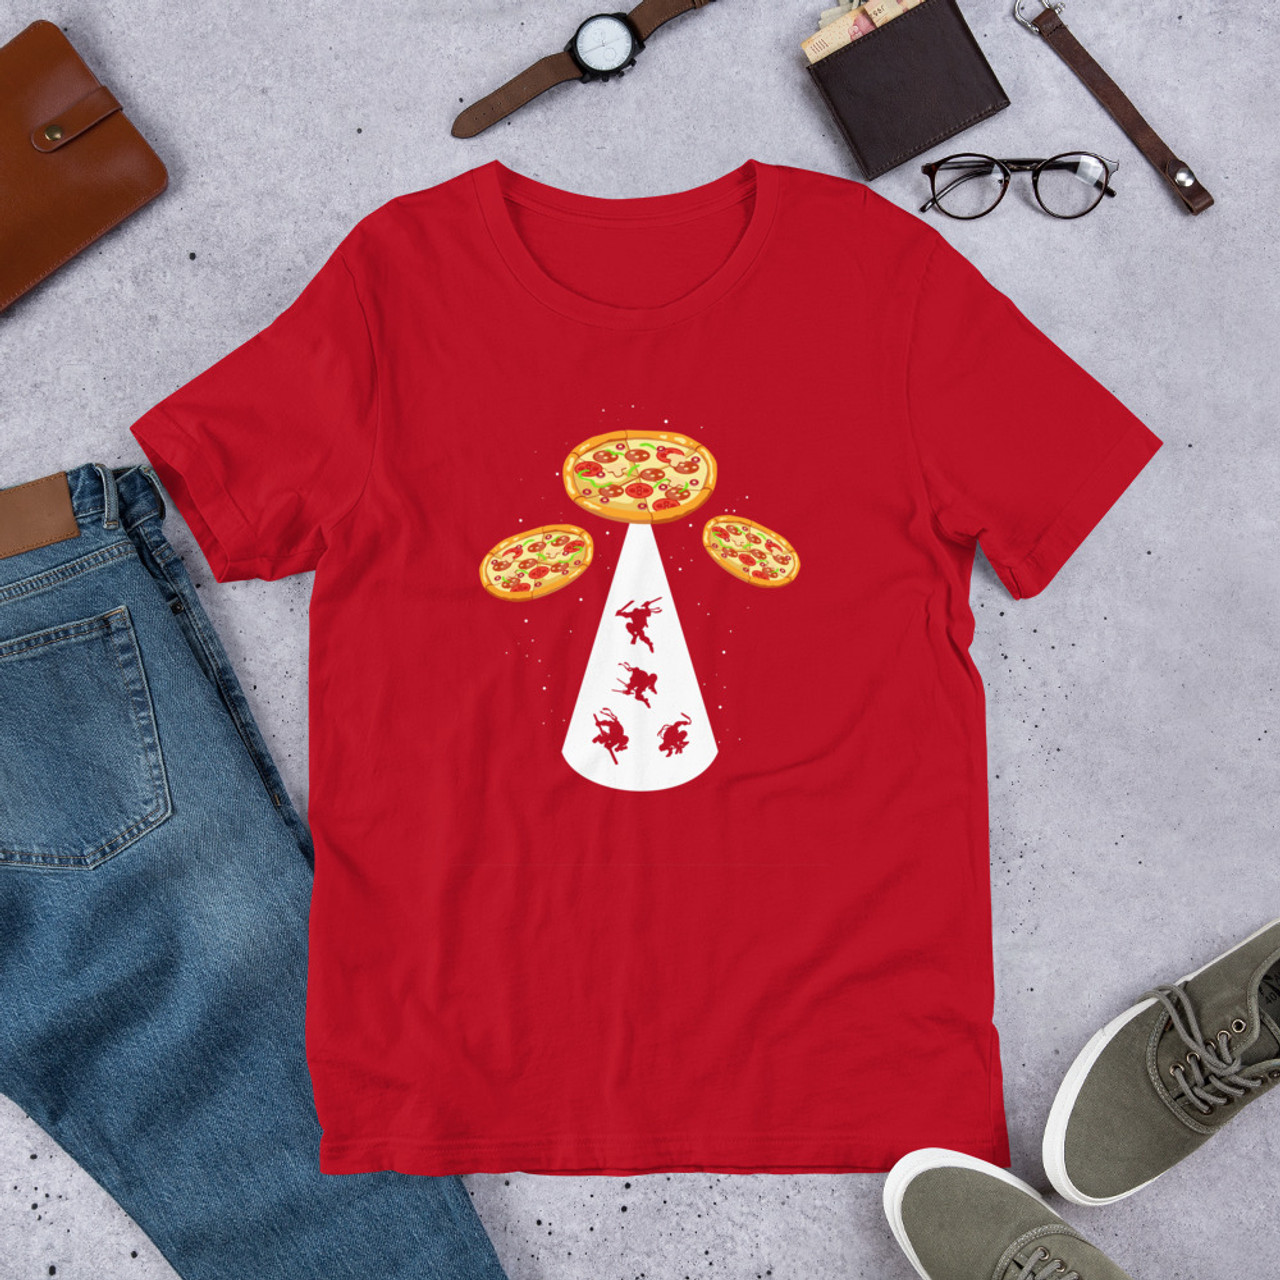 Red T-Shirt - Bella + Canvas 3001 Pizza UFO